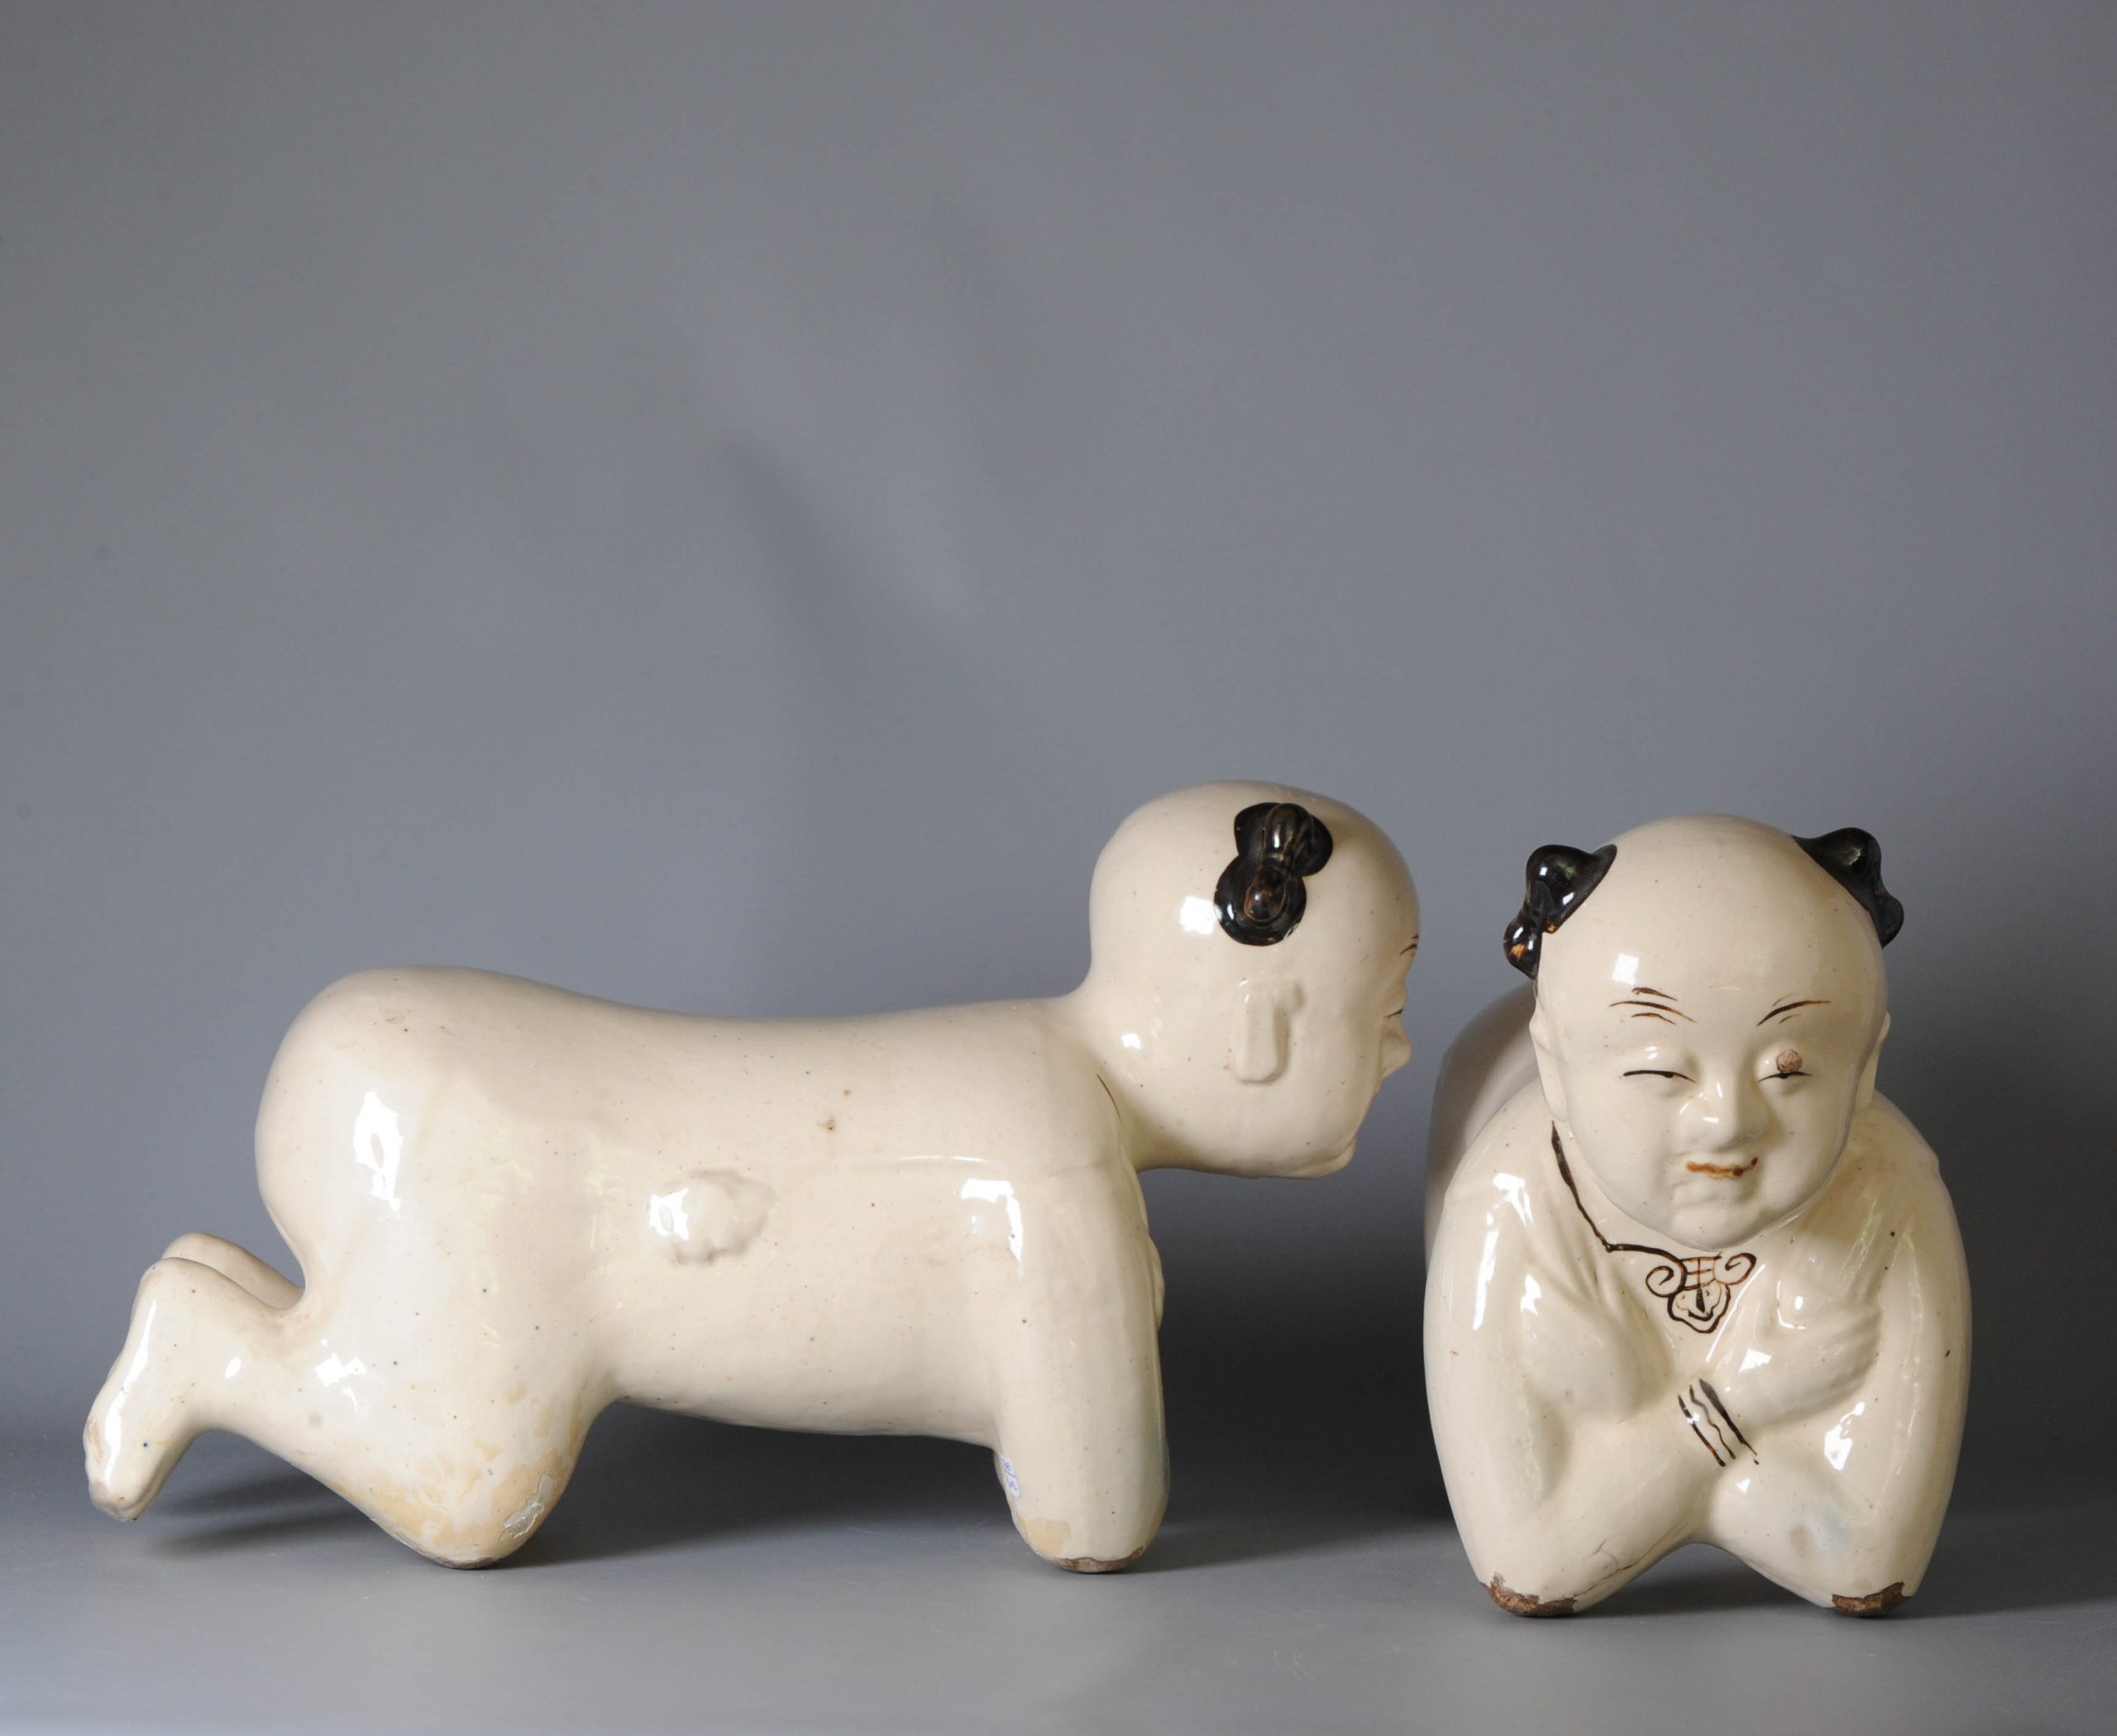 Pair of Ceramic Statues/Pillows China Republic period (1912-1949) Cream White Brown BOYS